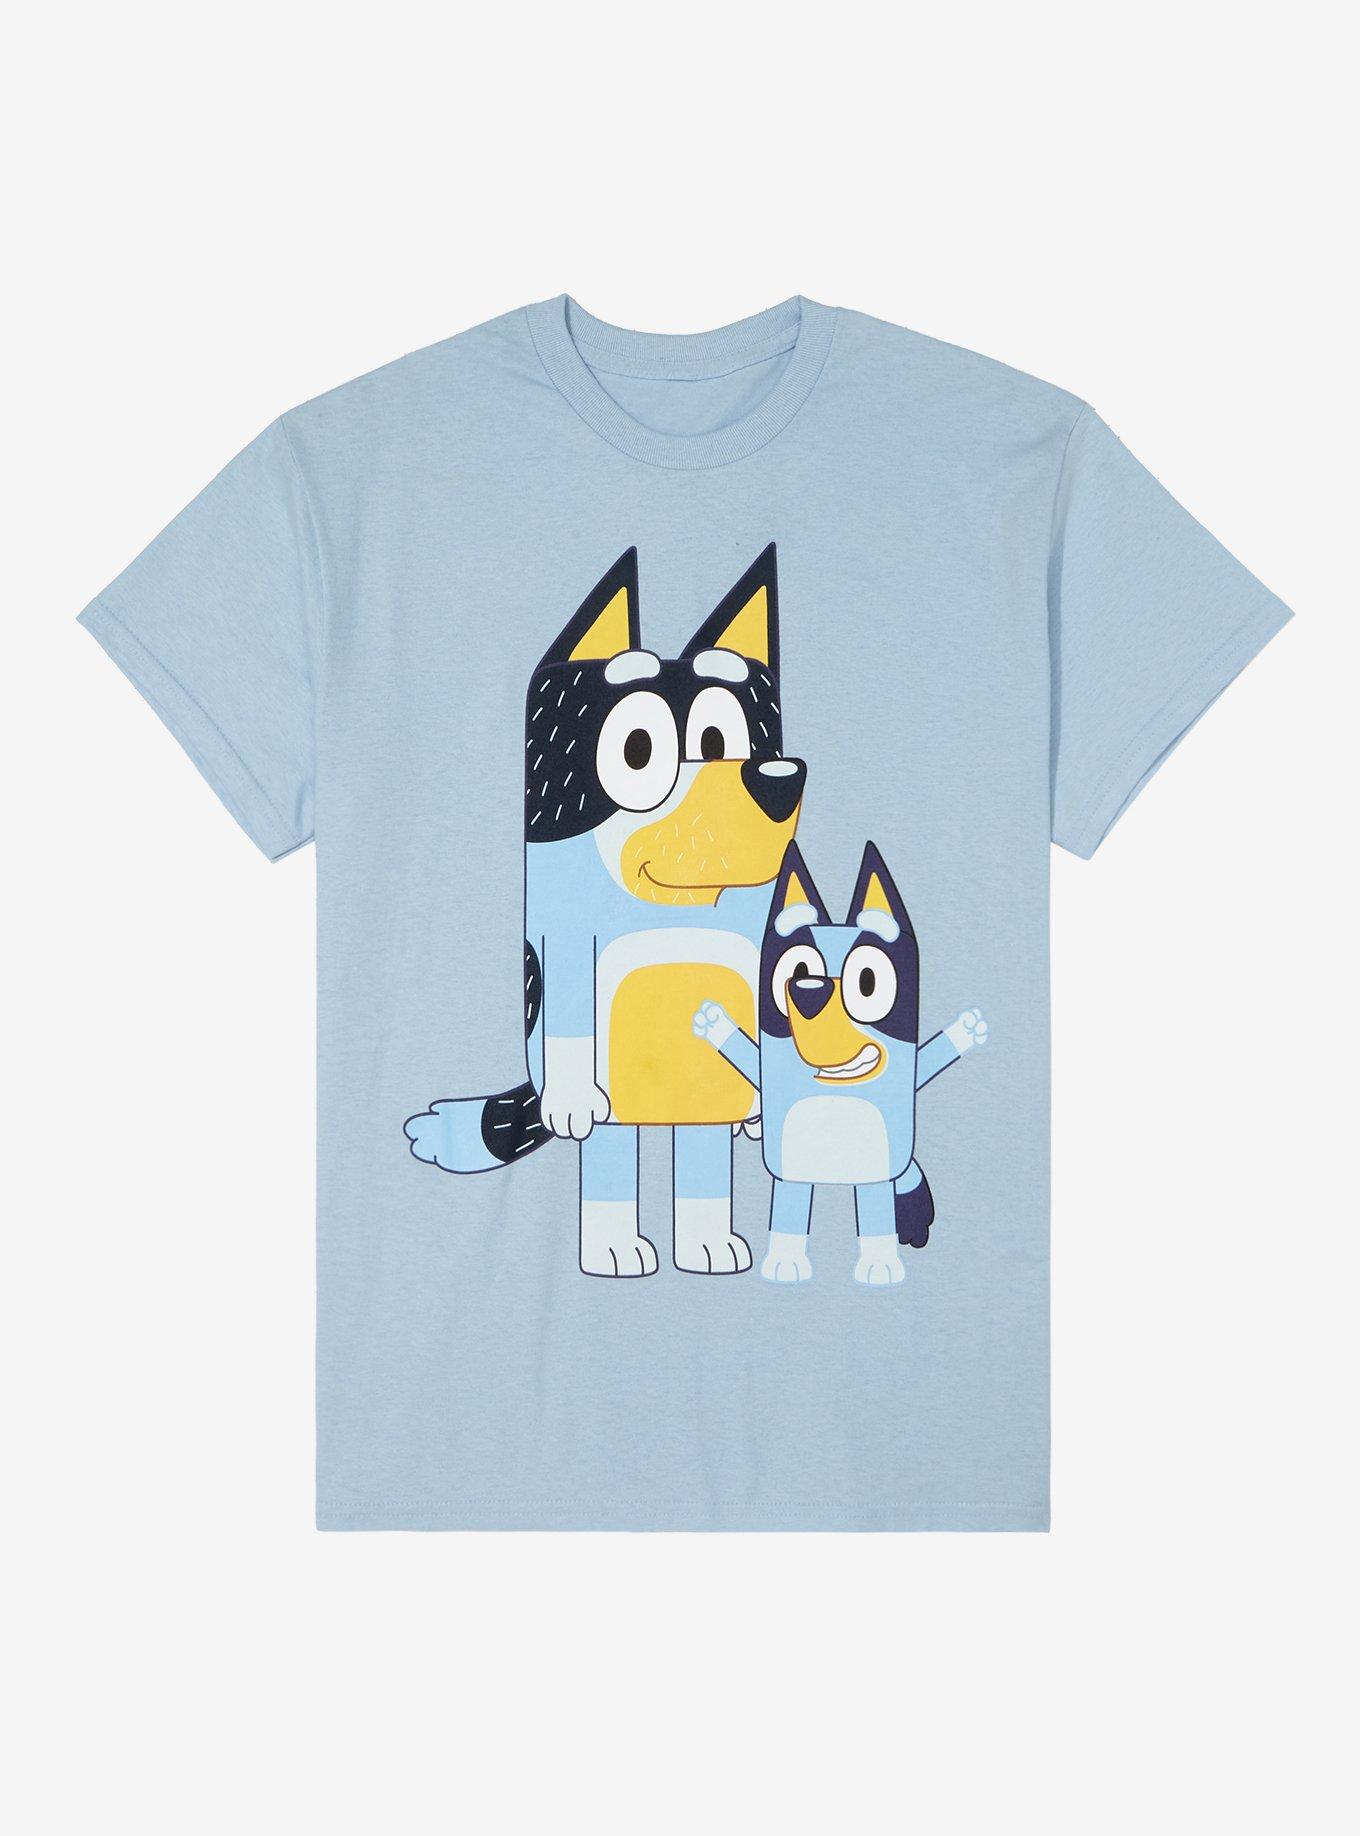 Bluey Dad Mens Long Sleeve Graphic T-Shirt Bandit Medium